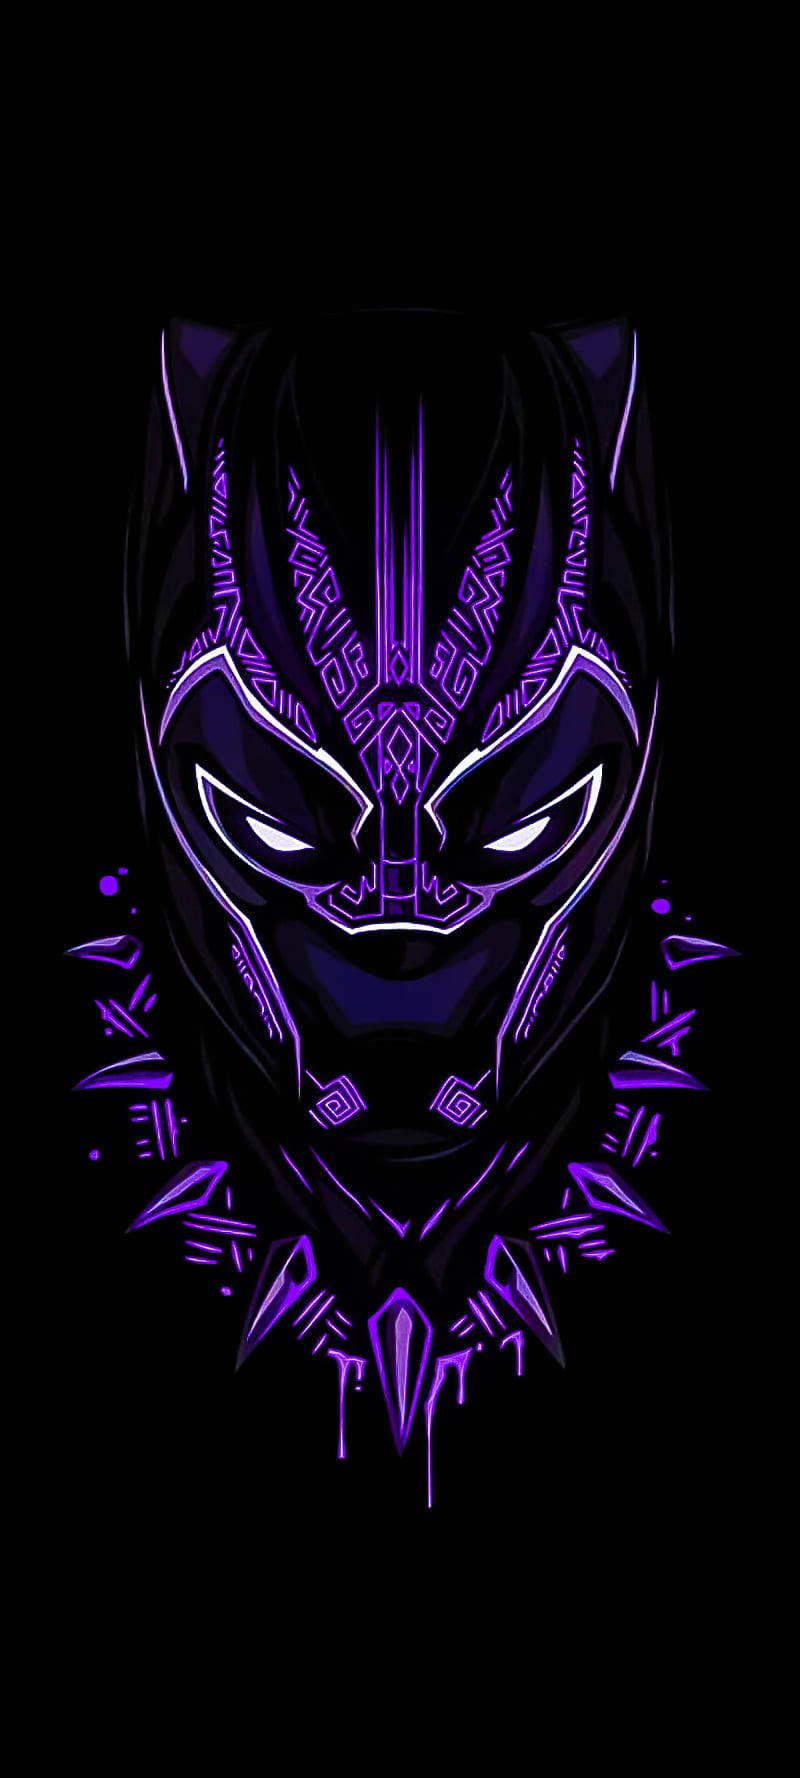  Black Panther Hintergrundbild 800x1778. Download Black And Purple Aesthetic Black Panther Wallpaper